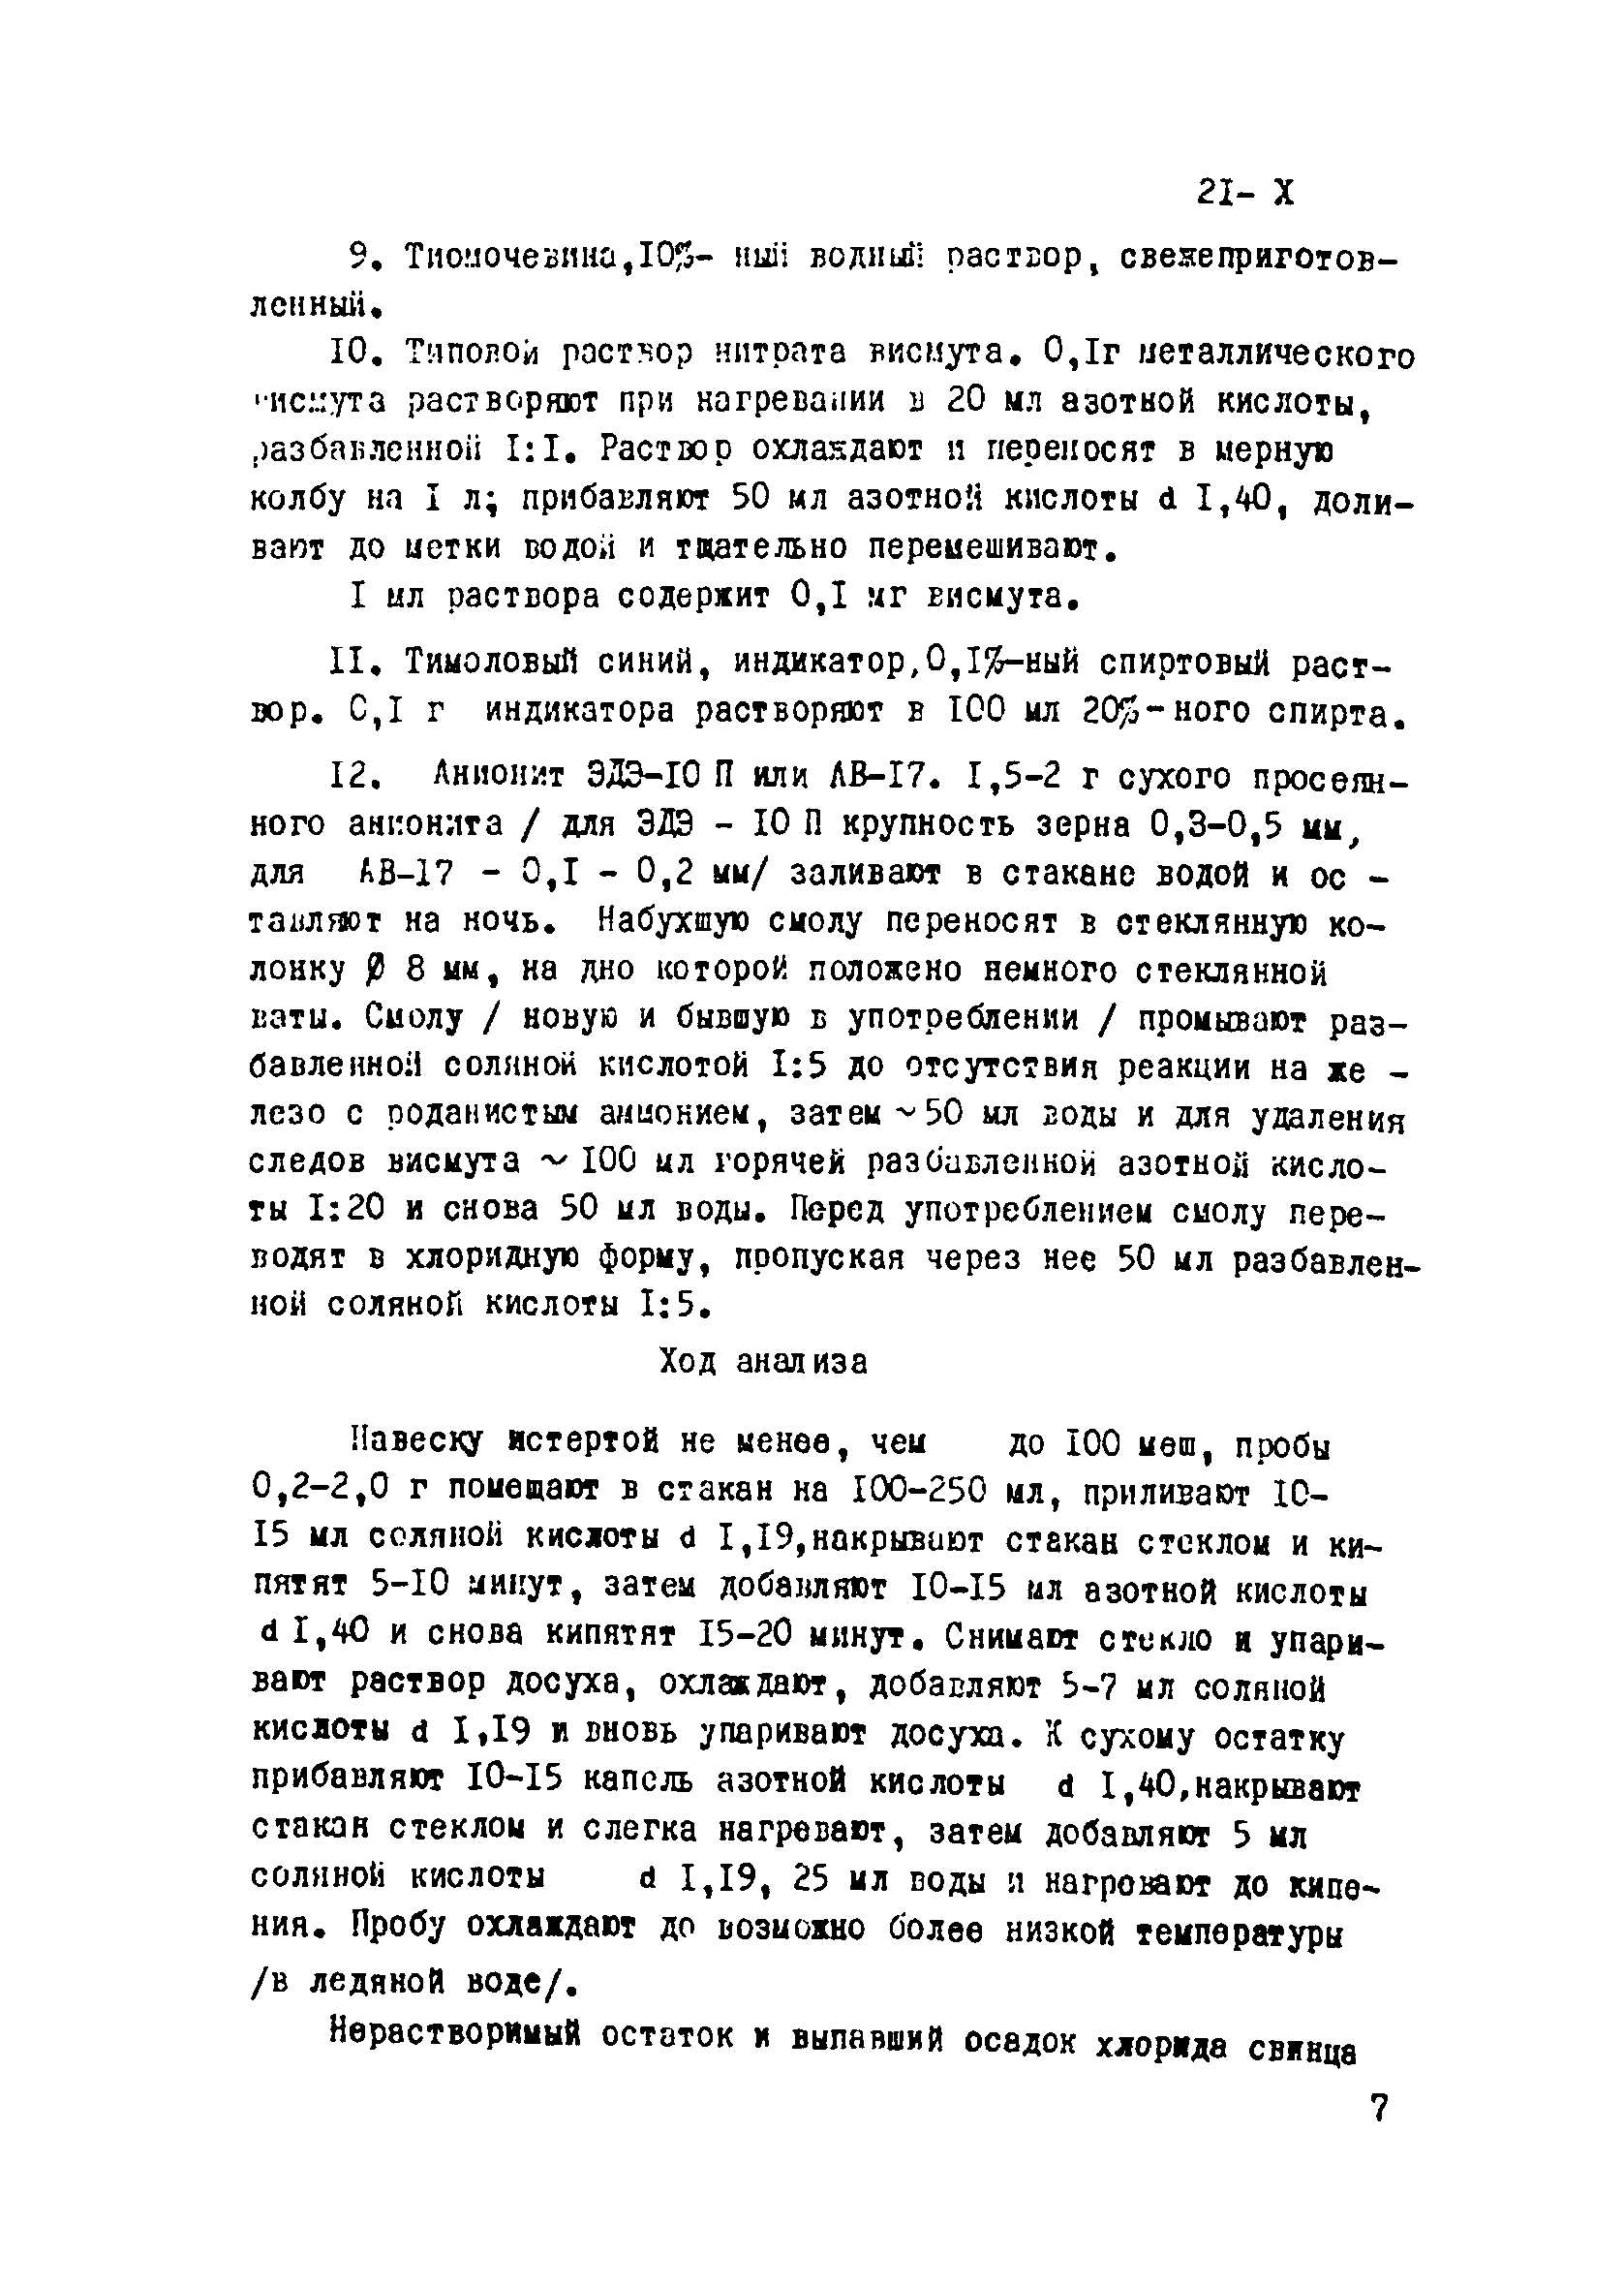 Инструкция НСАМ 21-Х